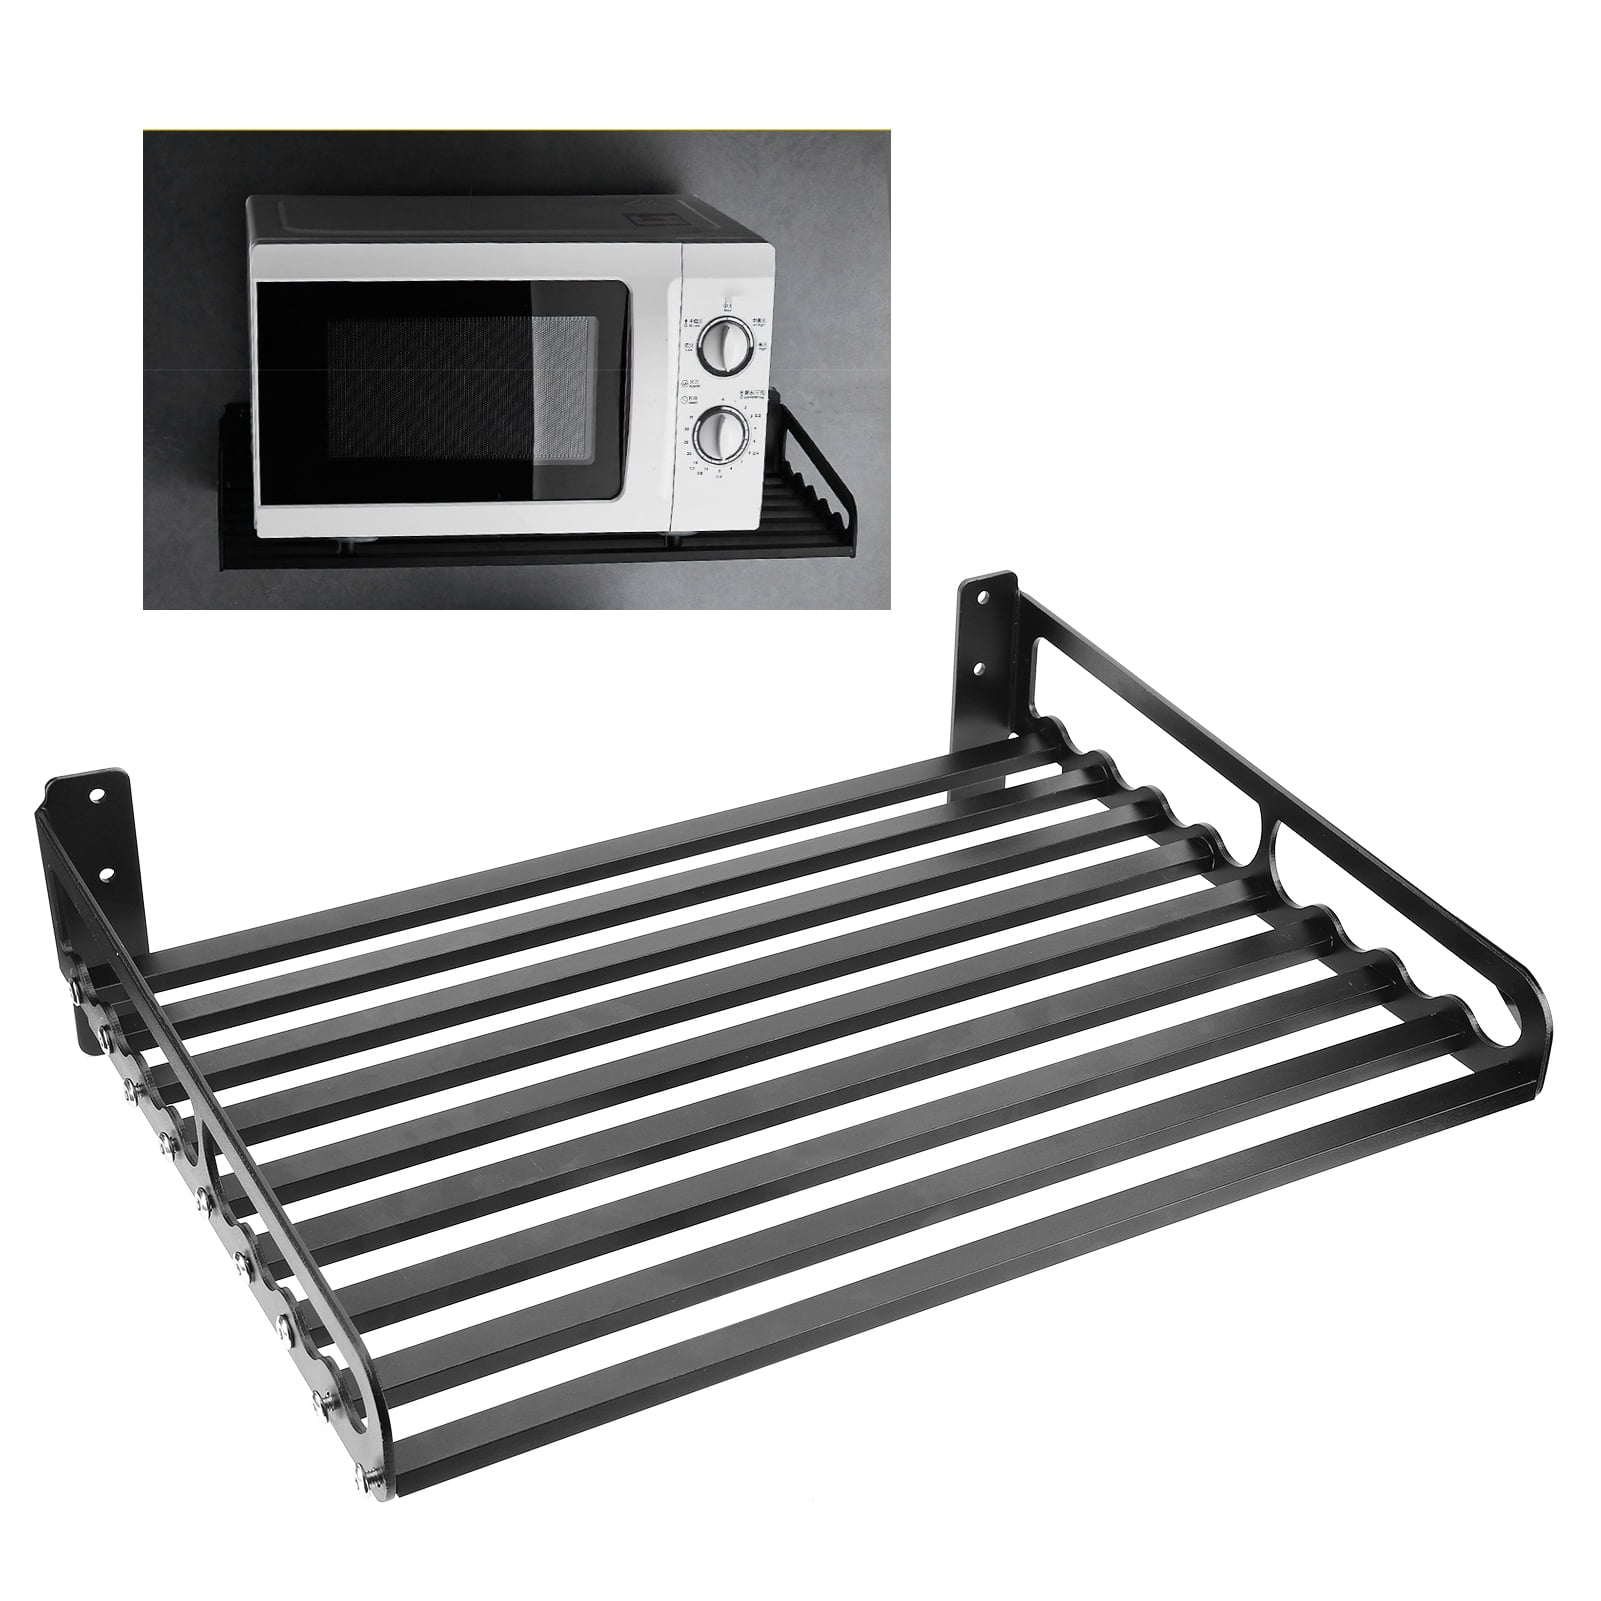 2 PCS Microwave Oven Bracket Foldable Stretch Wall Mount Rack Shelf Sturdy Stand 